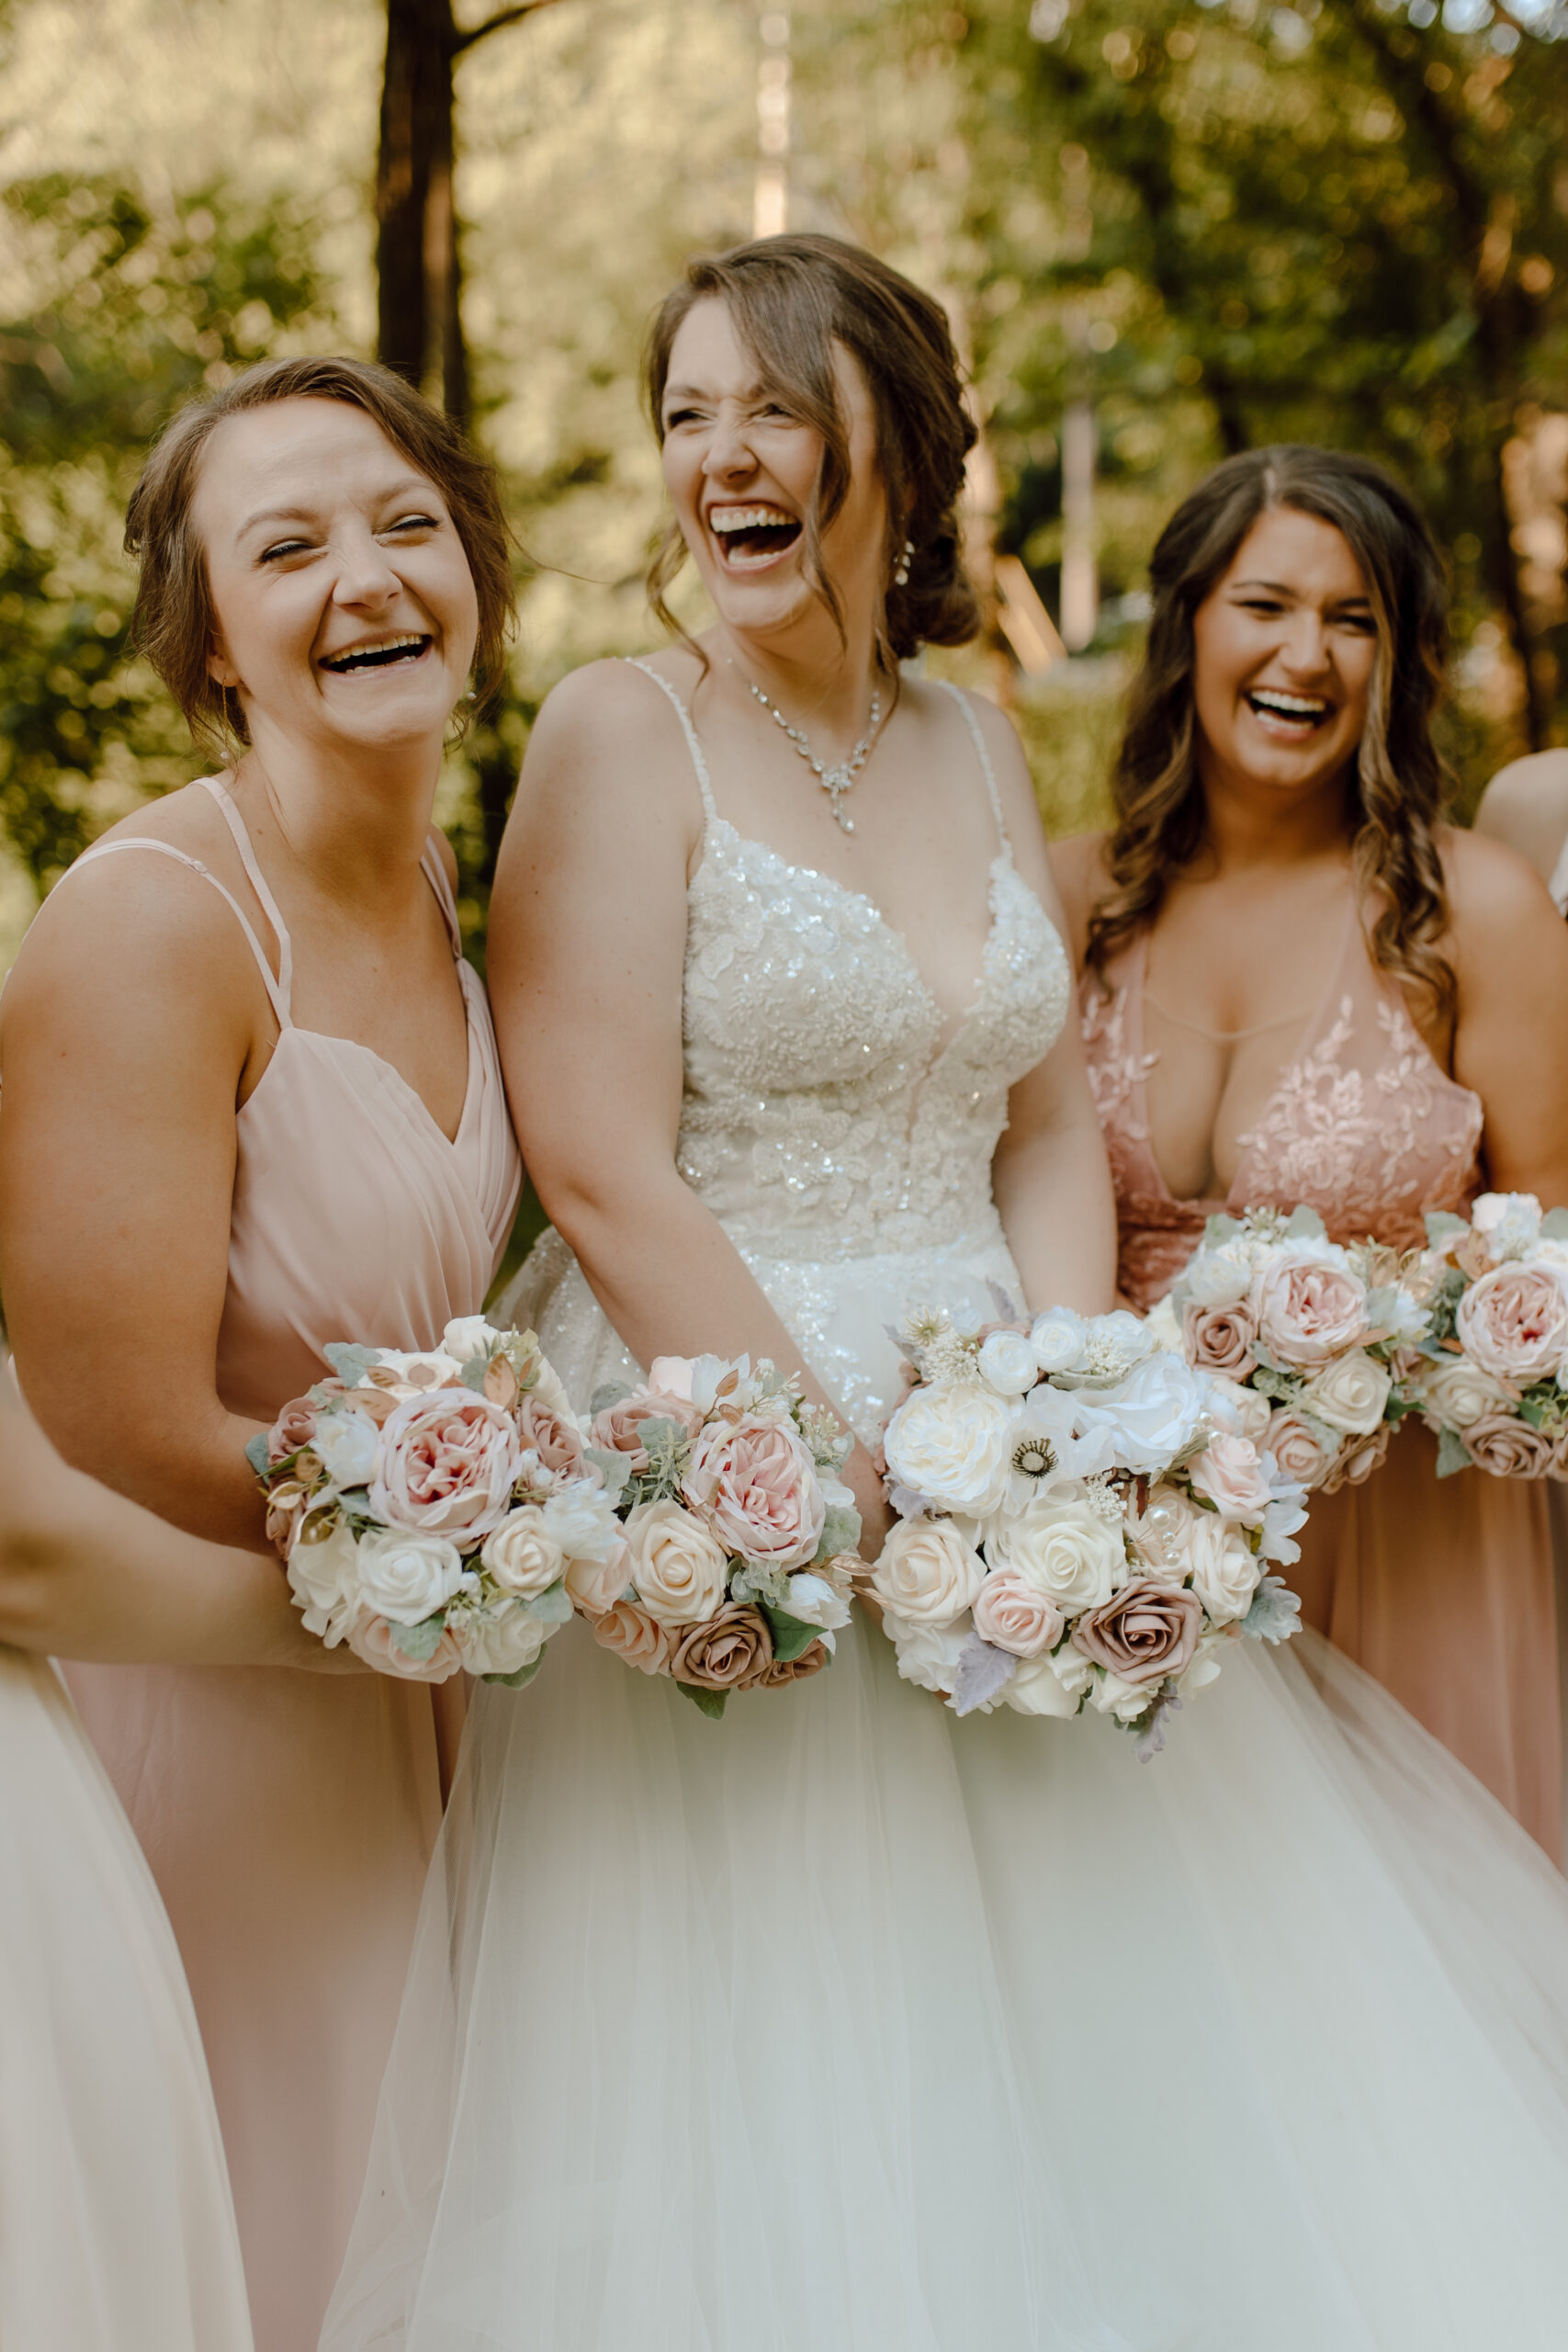 Make your Kentucky wedding album extraordinary with simple expert tips. Create unforgettable moments beyond ordinary photos. Kentucky Wedding Photographer, Winchester KY